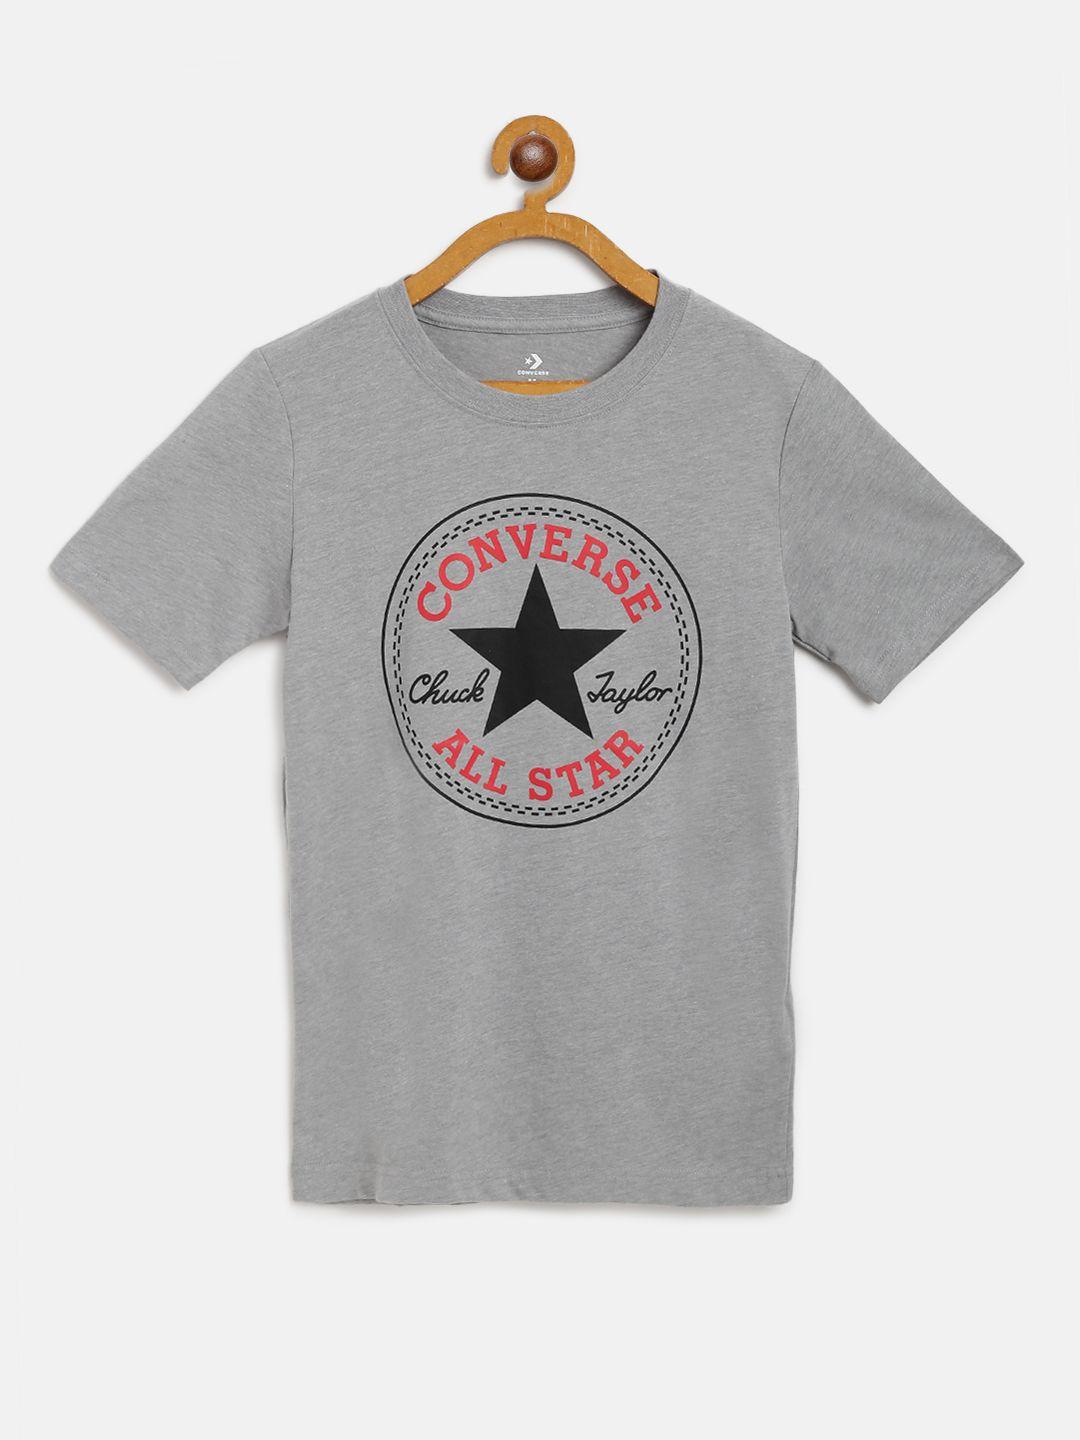 converse-boys-grey-melange-&-black-brand-logo-print-round-neck-t-shirt